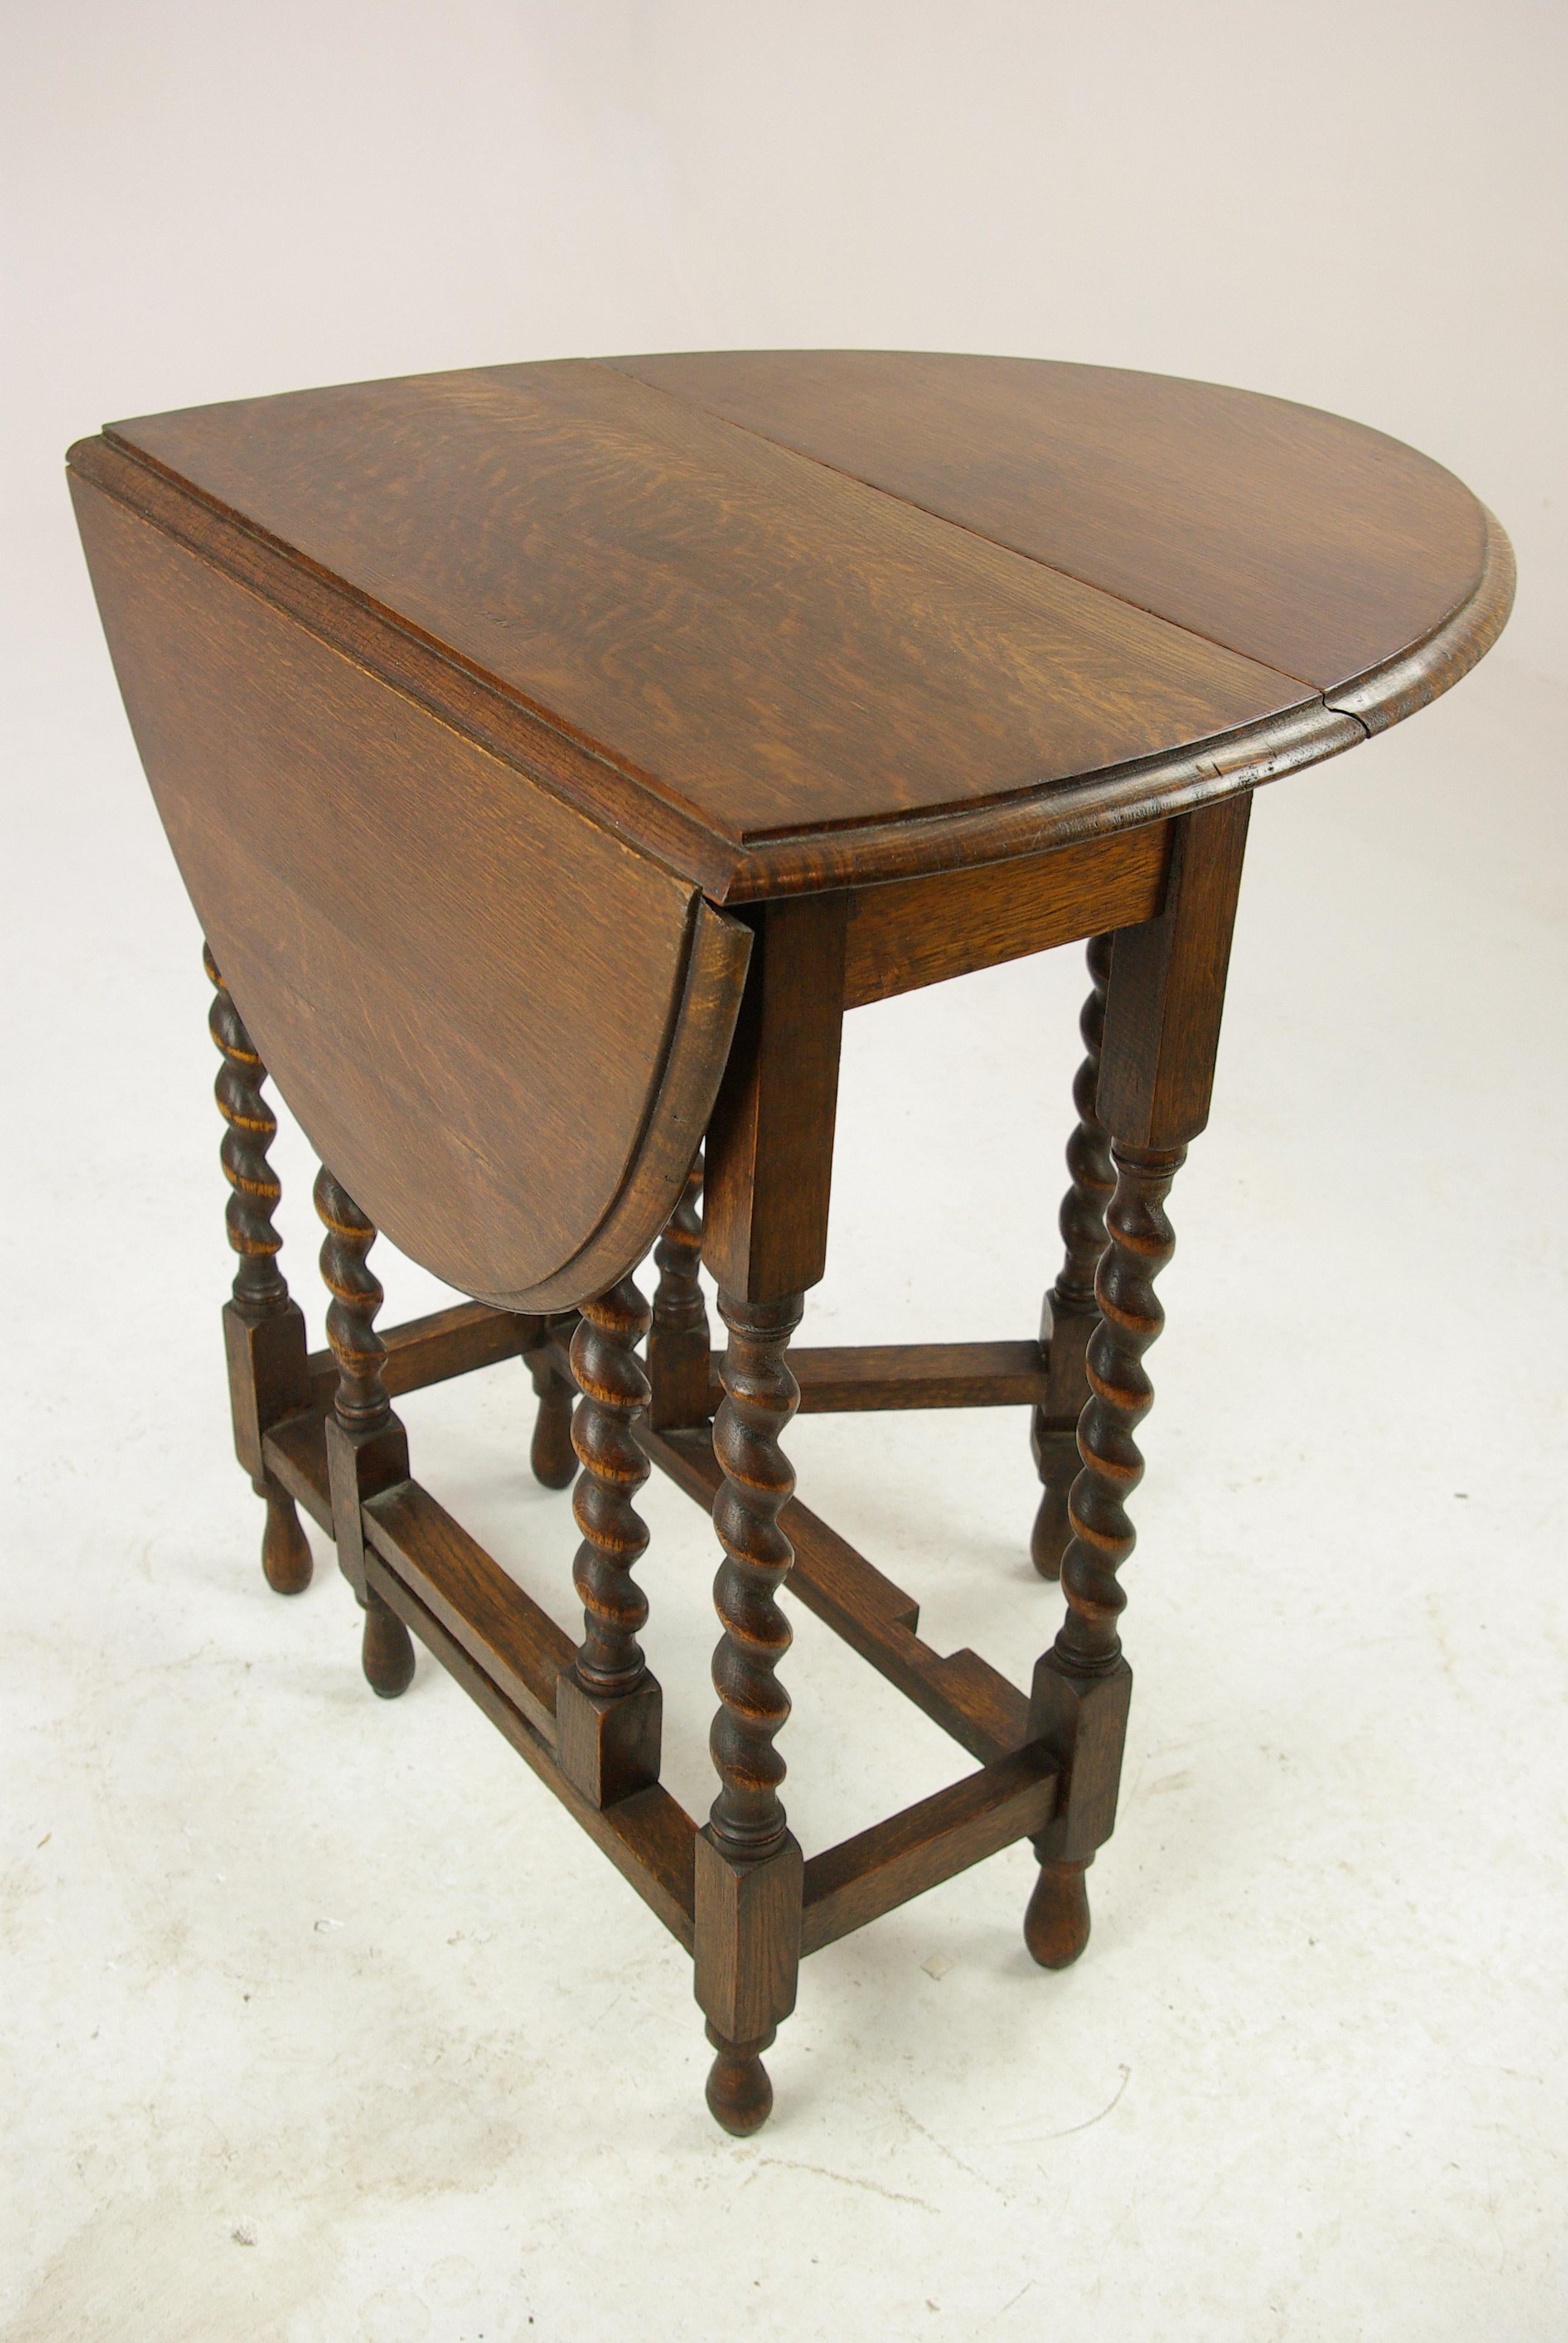 Scottish Antique Gateleg Table, Barley Twist Oval Drop Leaf Table, Scotland 1920s, B1417